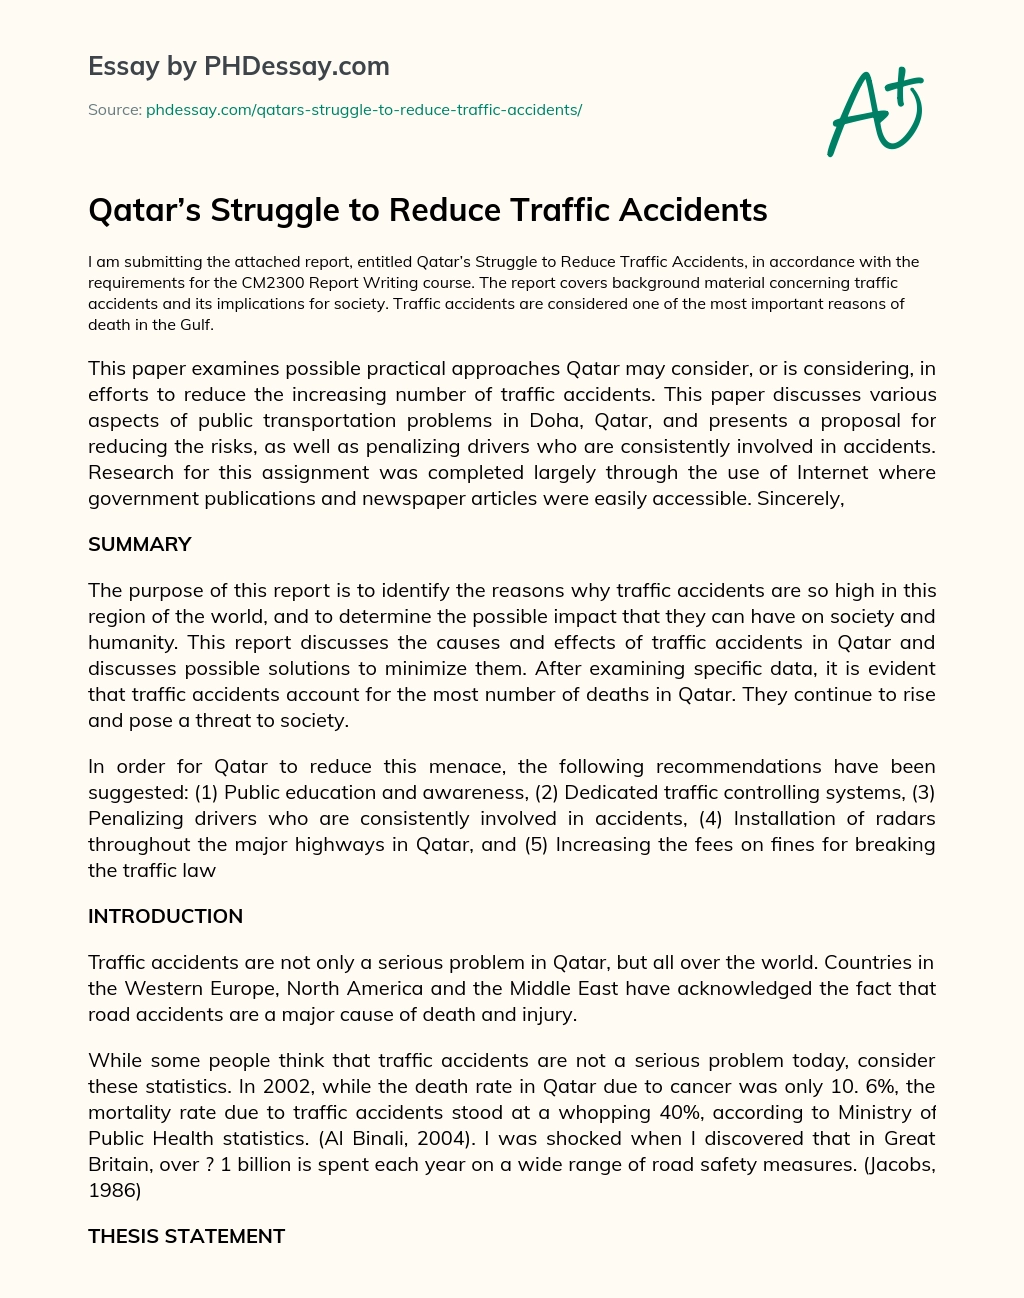 Qatar’s Struggle to Reduce Traffic Accidents essay